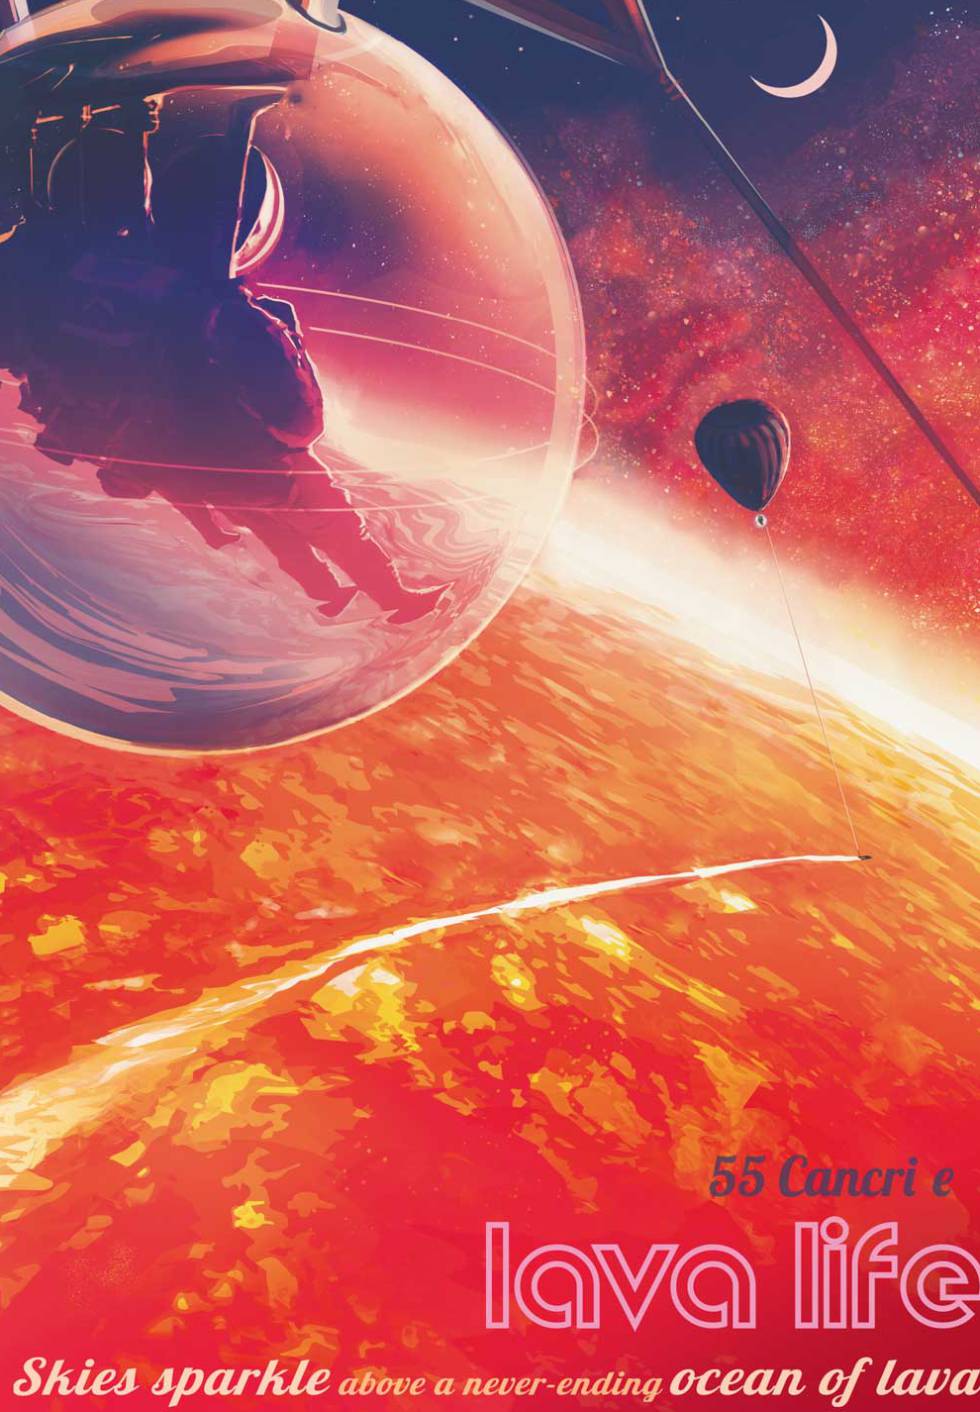 Poster promocional de la NASA sobre un hipotético viaje a los océanos de lava del exoplaneta 55 Cancri e.